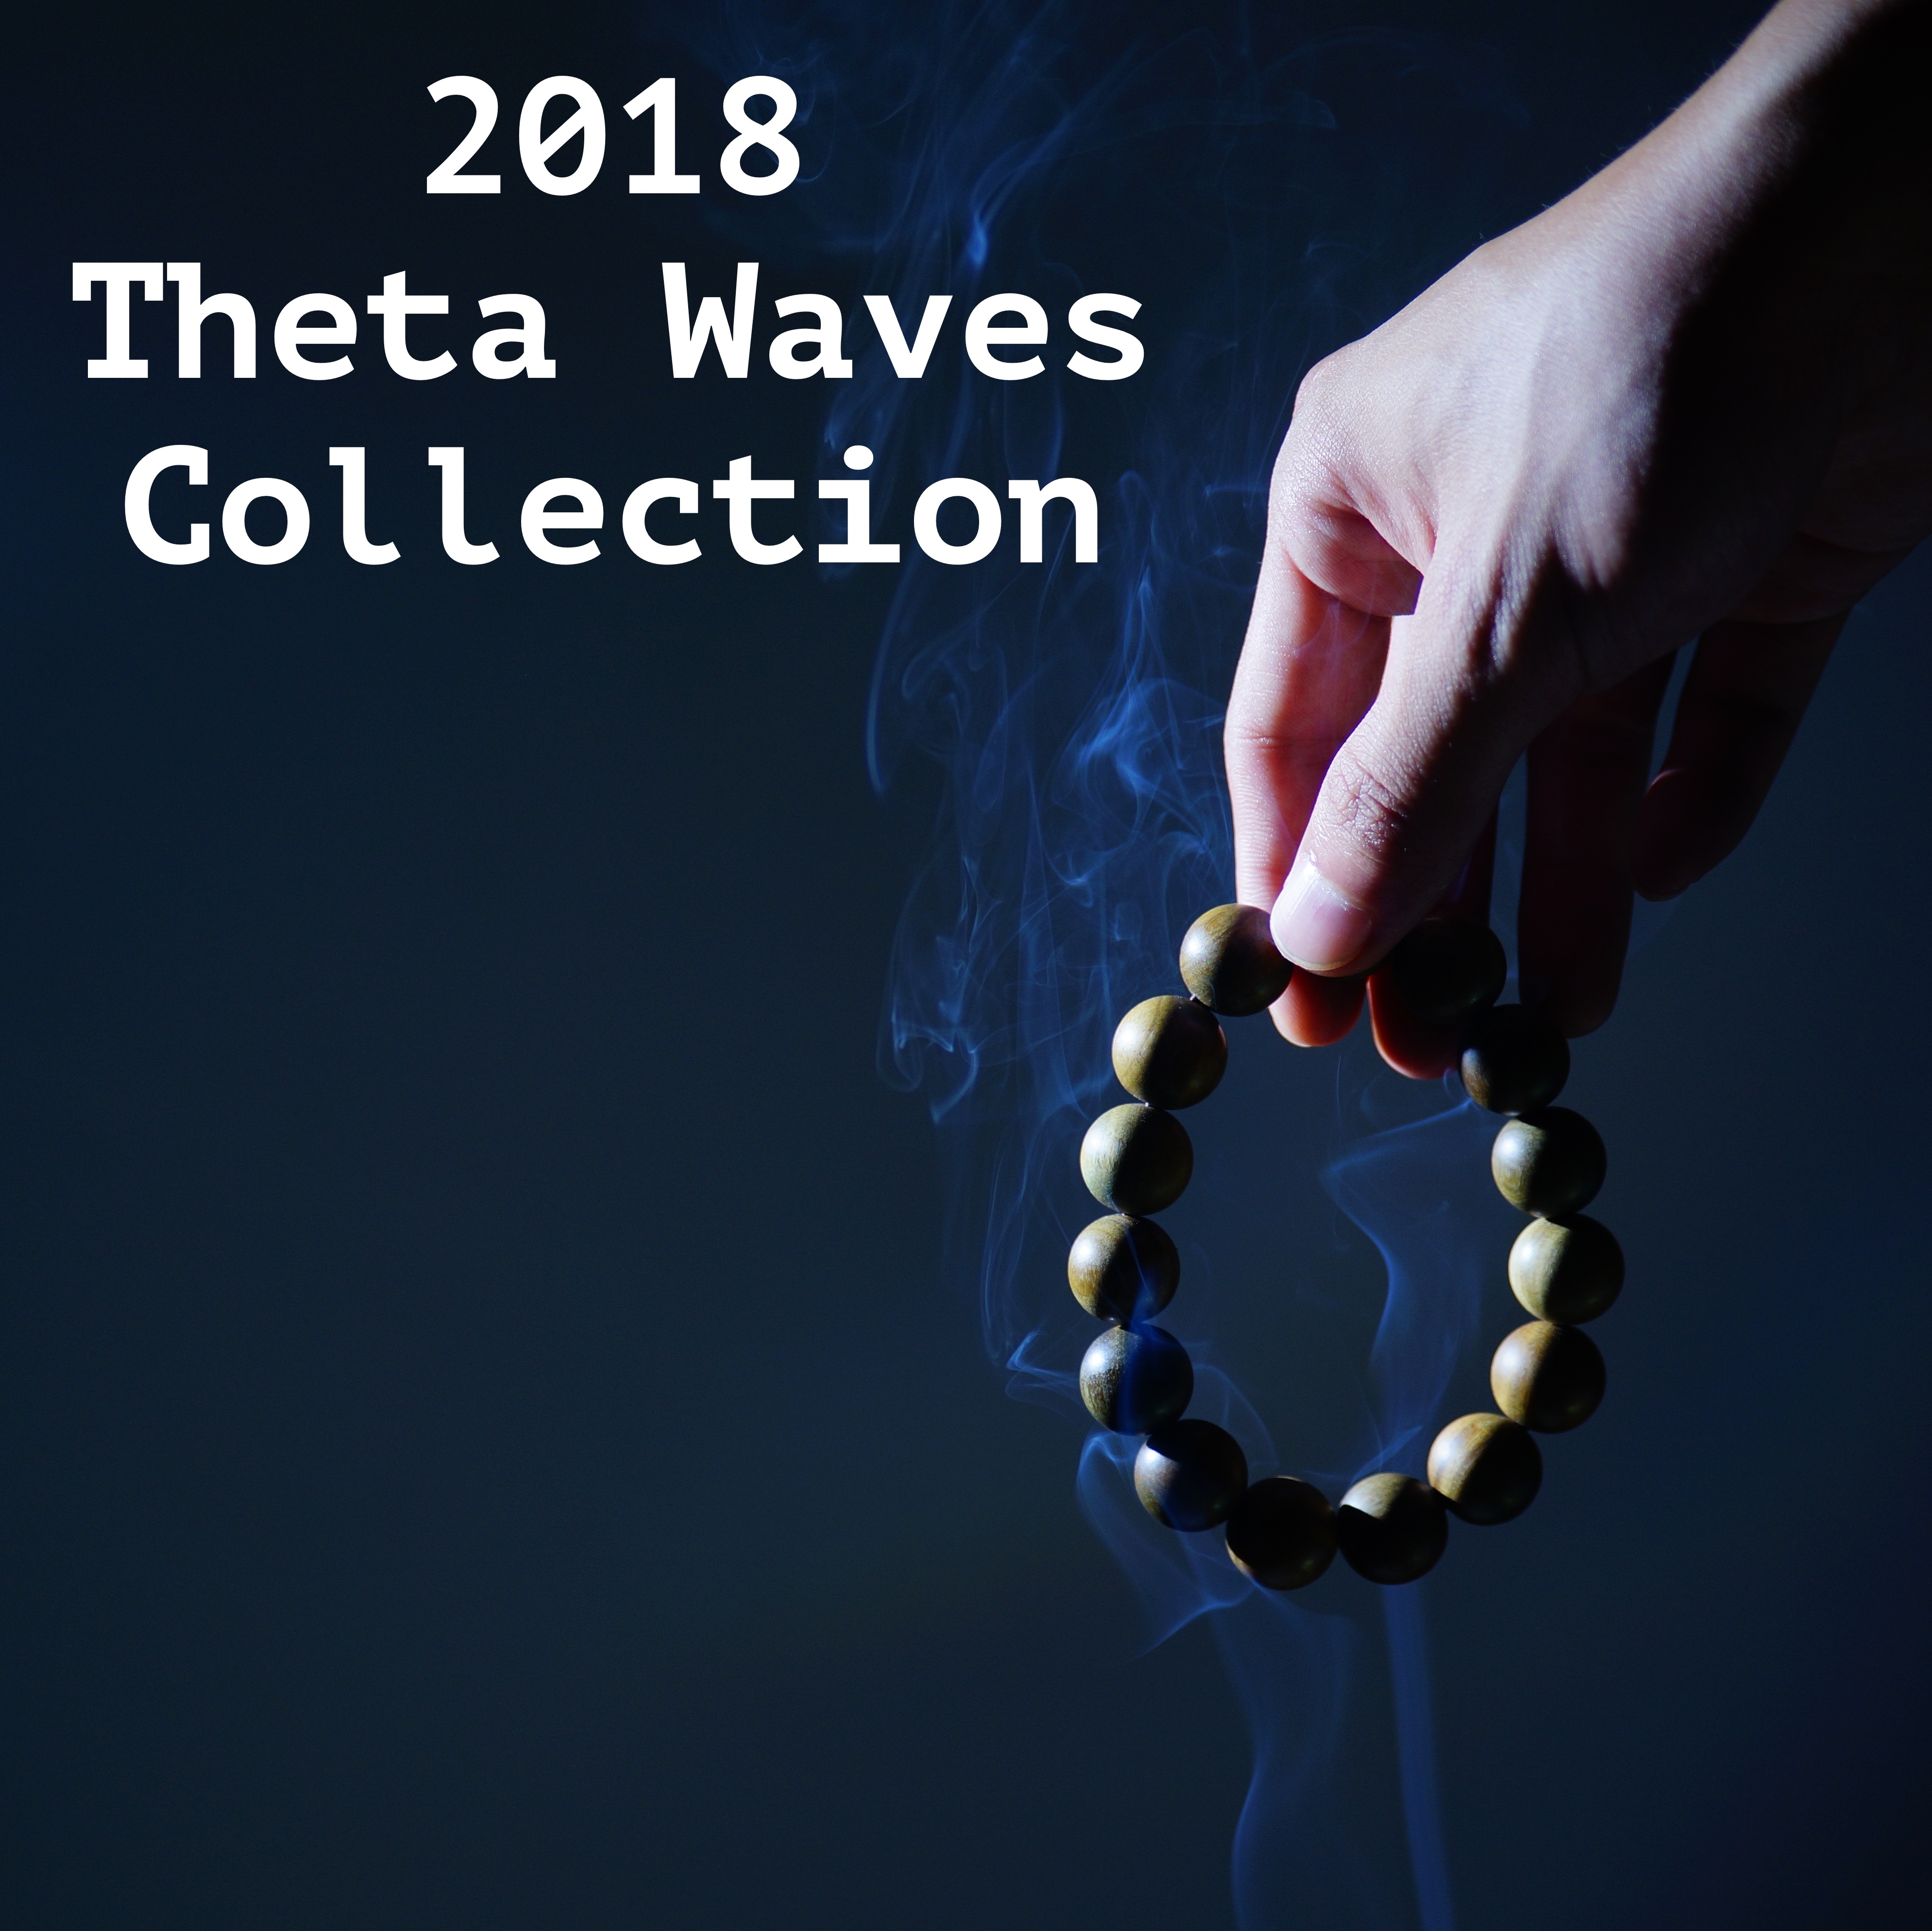 2018 Theta Waves Collection - Binaural Beats to Help You Sleep